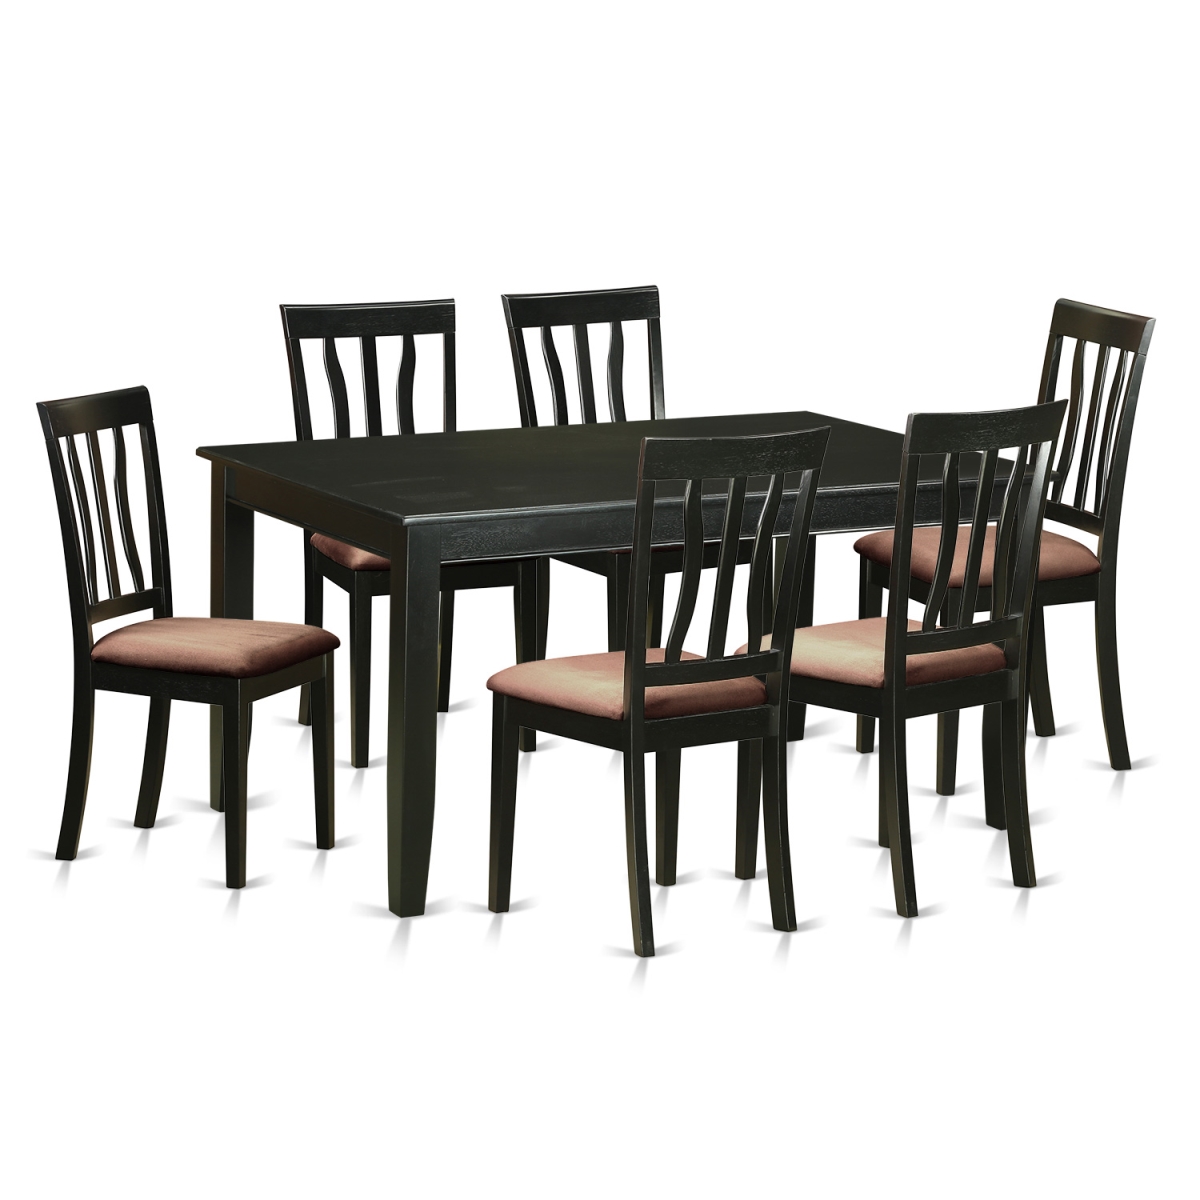 Duan7-blk-c Dinette Set With 6 Table & 6 Chairs, Black - 7 Piece